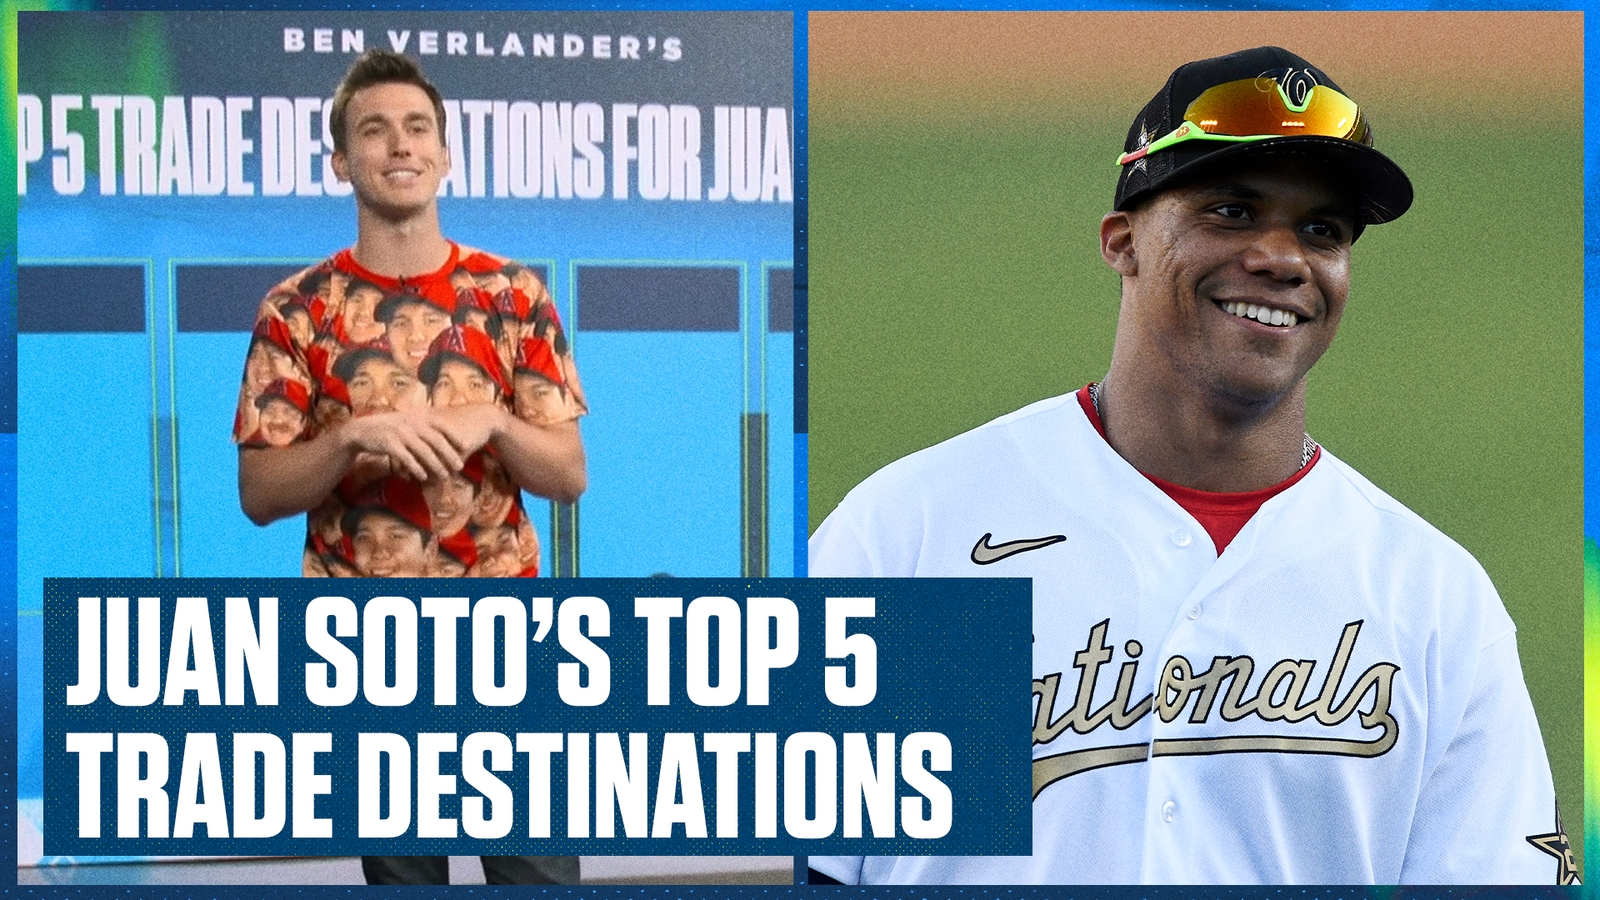 Juan Soto's top destination spots 